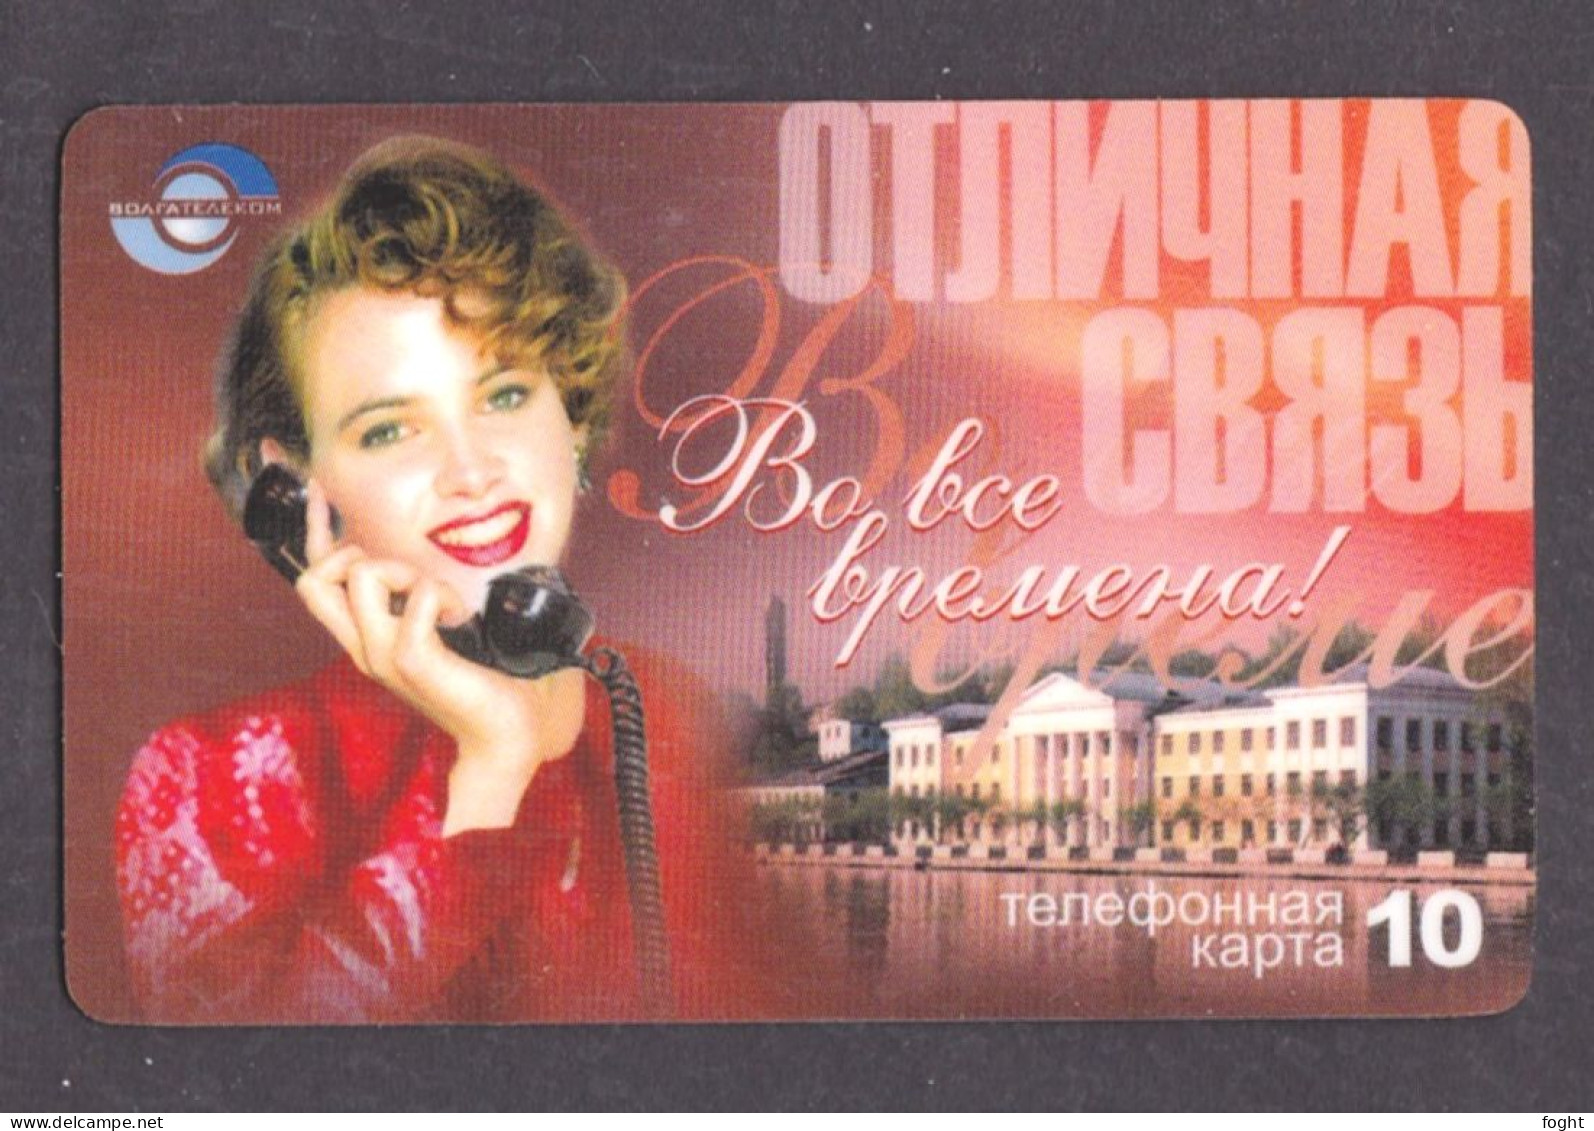 2003 ЕЮ Remote Memory Russia ,Volga Telecom-Izhevsk,Good Connection All The Time!,10 Units Card,Col:RU-PRE-UDM-0272 - Russie